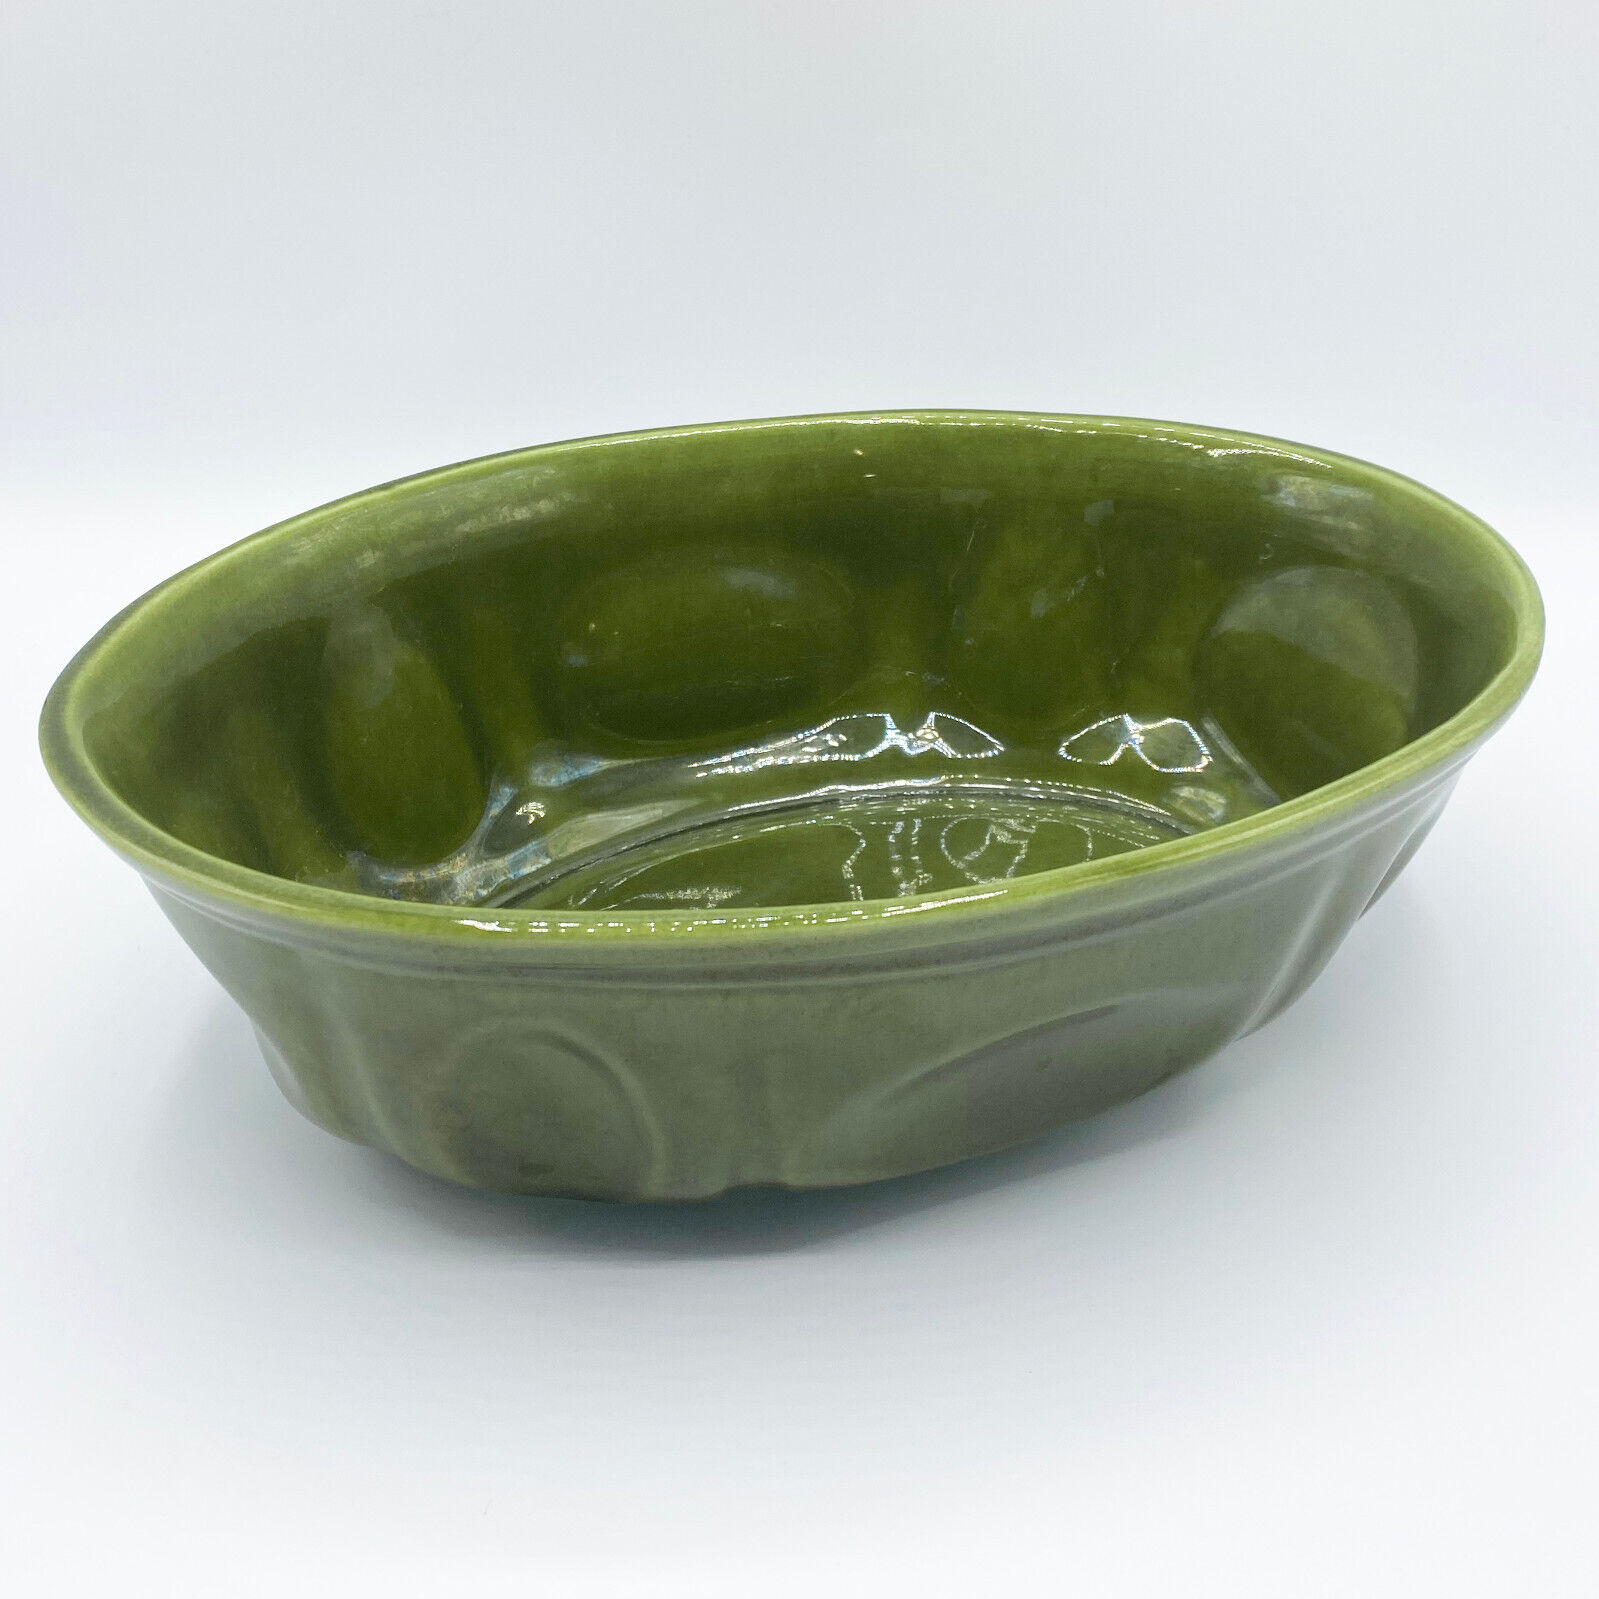 HAEGER Vintage 60s 70s Olive Green Oval Pottery Planter Bowl - No. 3929